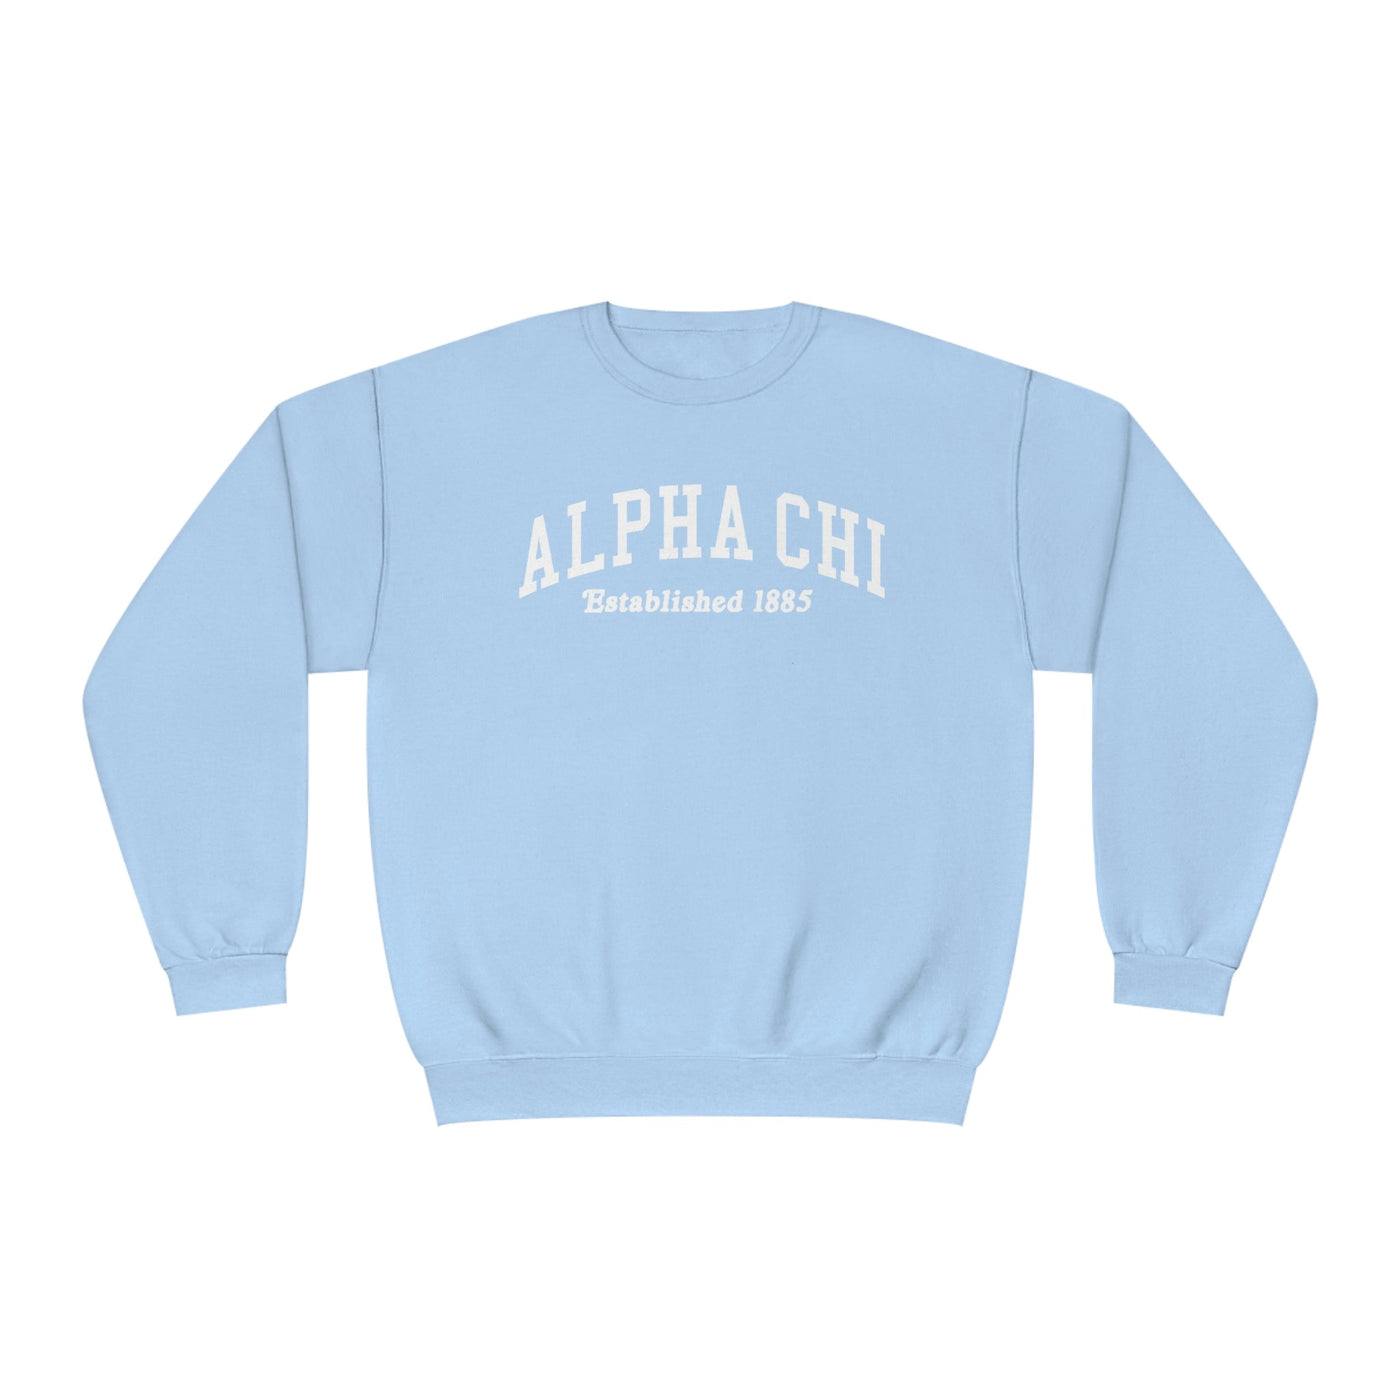 Alpha Chi Omega Sorority Varsity College AXO Crewneck Sweatshirt